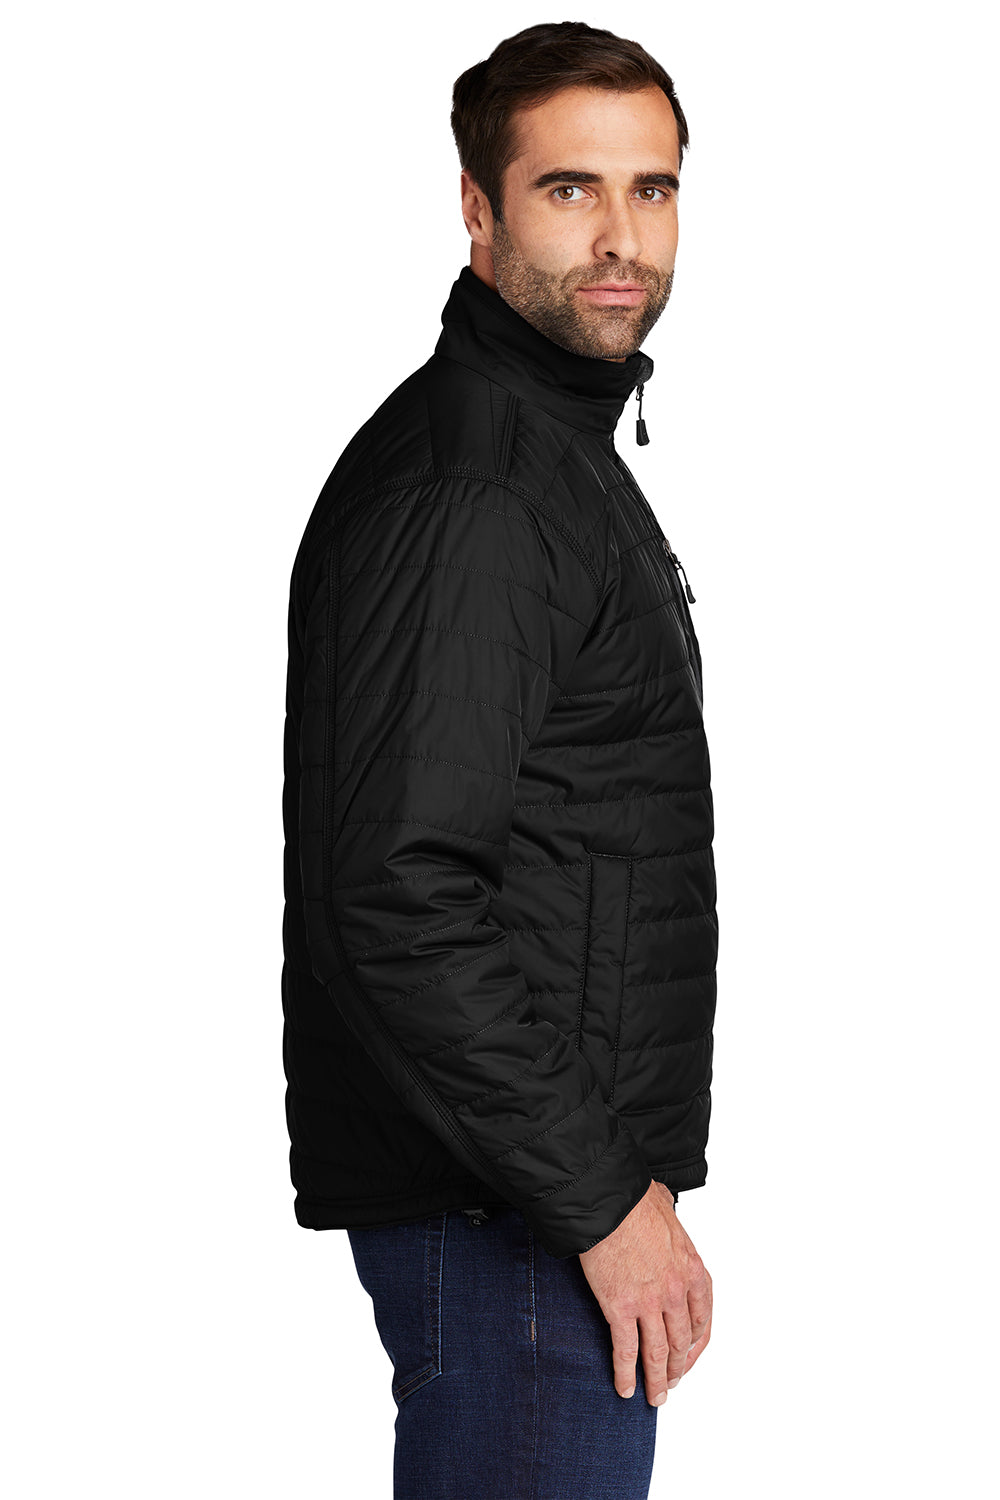 Carhartt CT102208 Mens Gilliam Wind & Water Resistant Full Zip Jacket Black Model Side